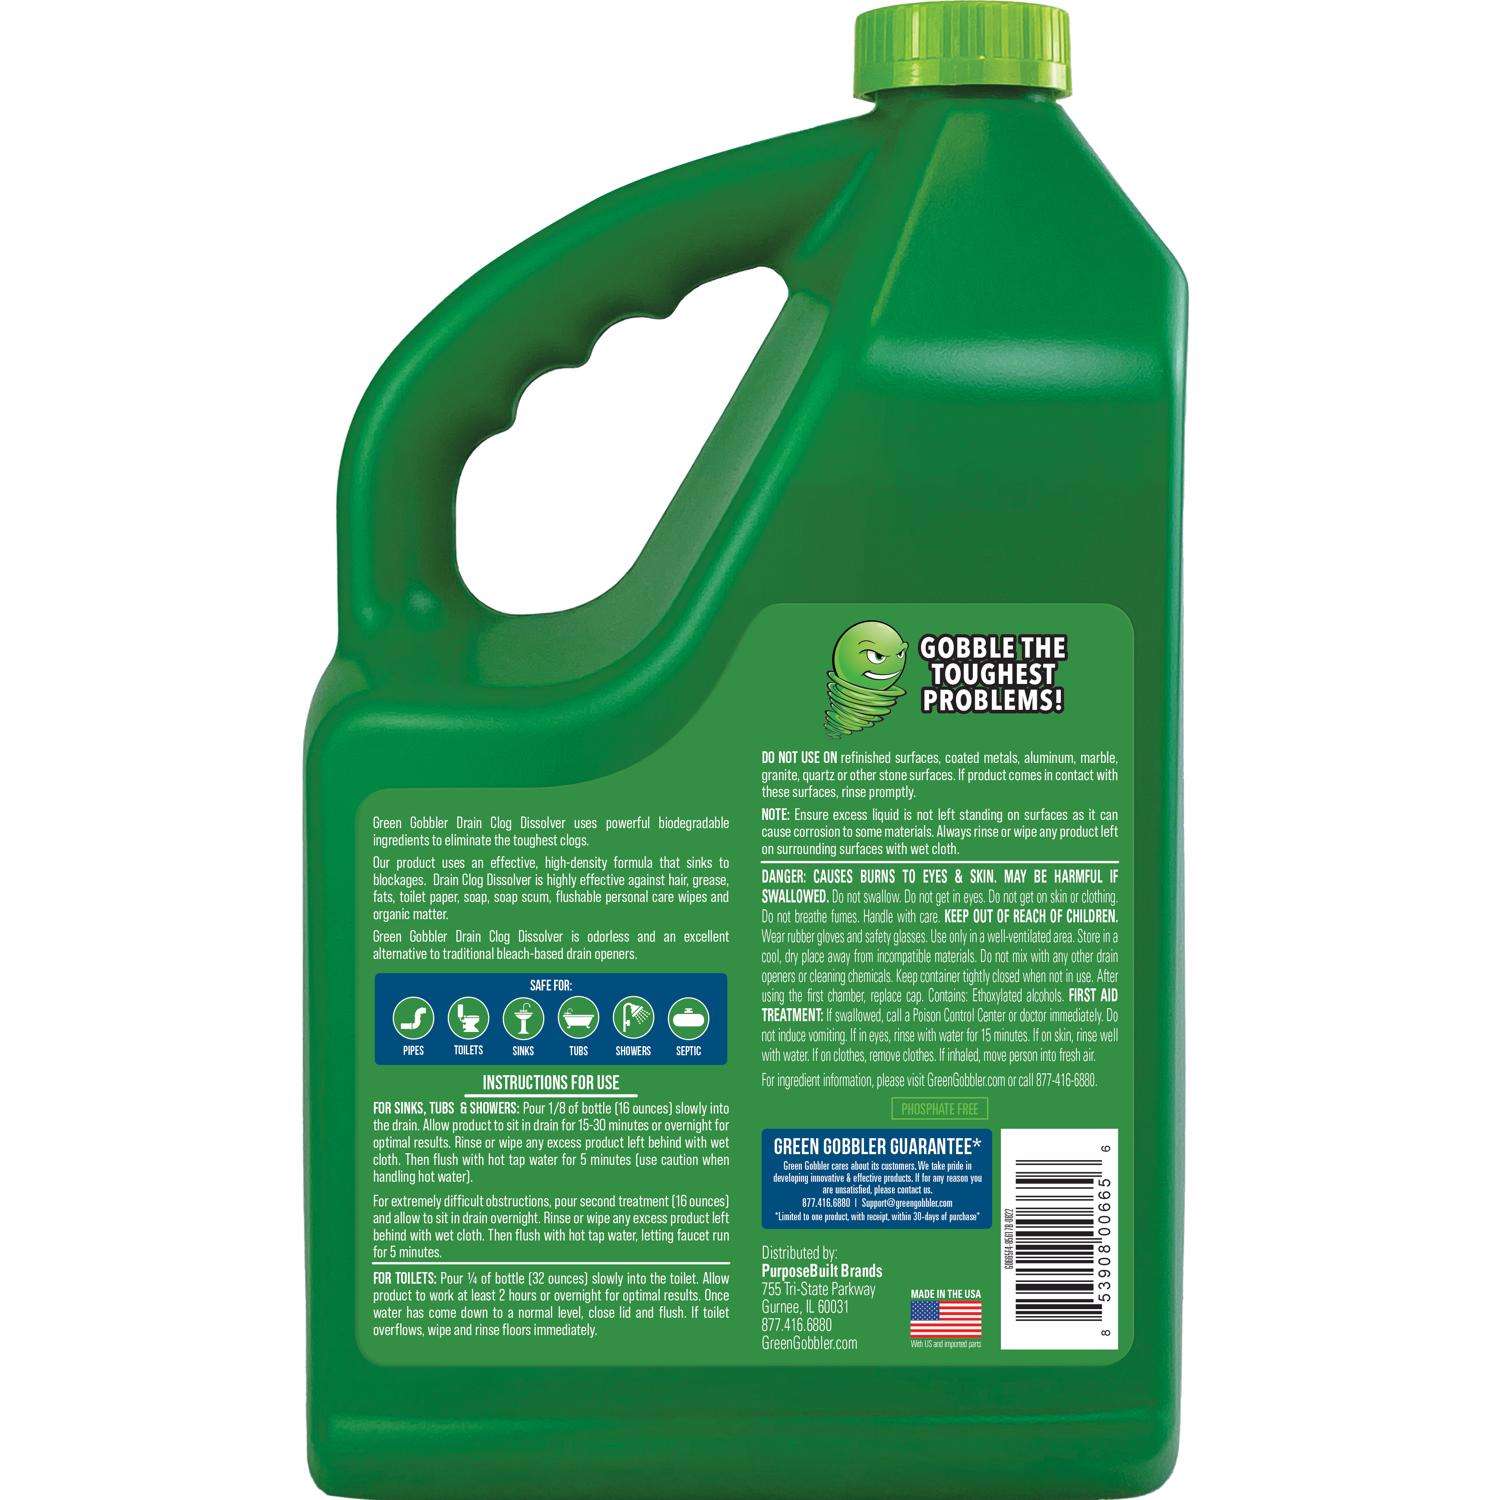 Green Gobbler Liquid Drain Clog Remover 1 gal - Ace Hardware